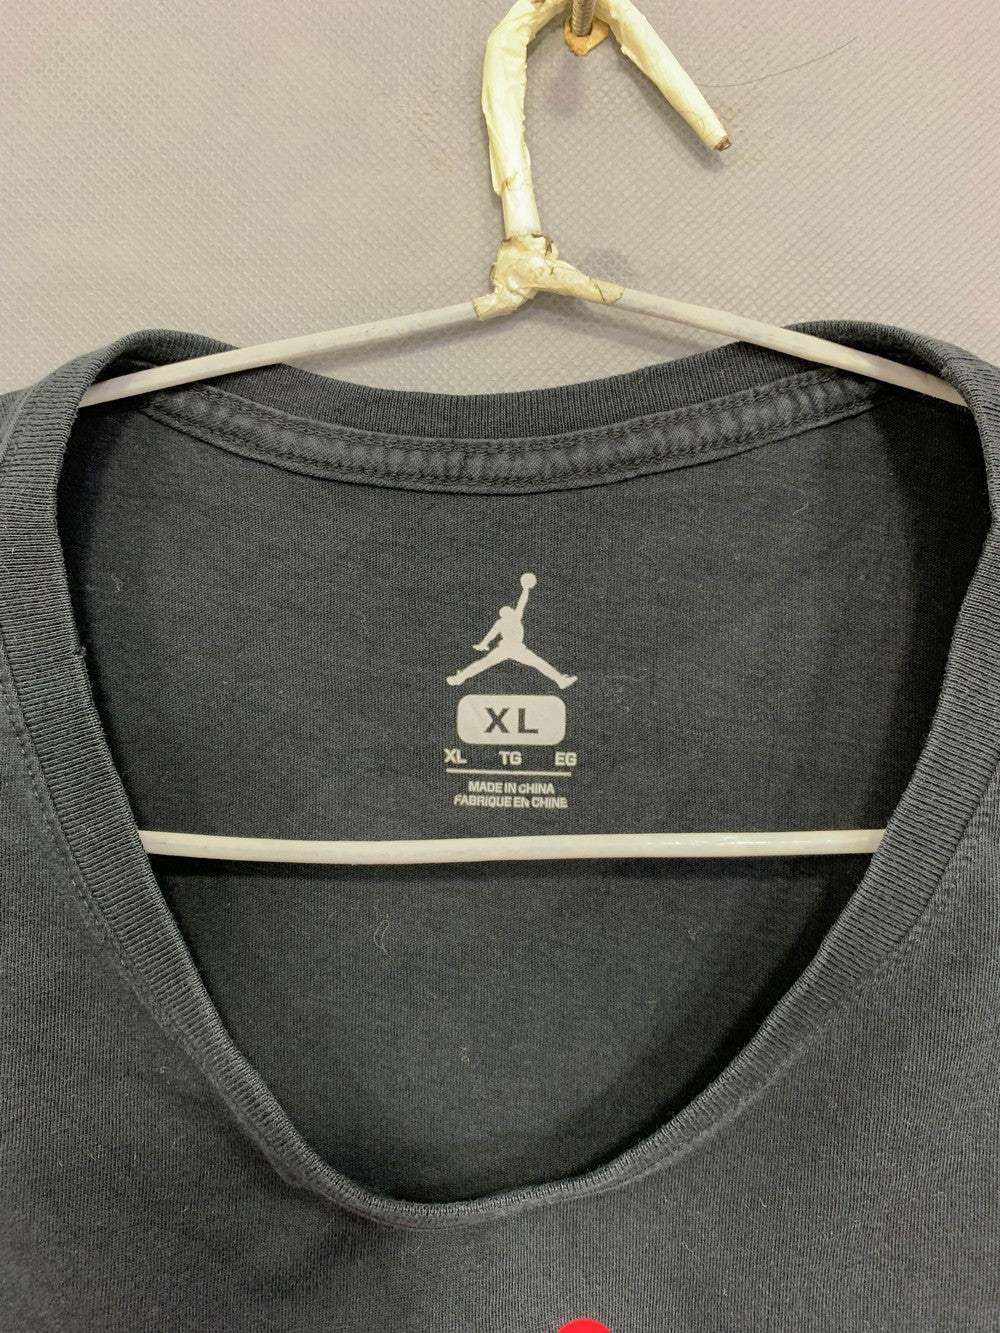 Jordan Branded Original Cotton T Shirt For Men